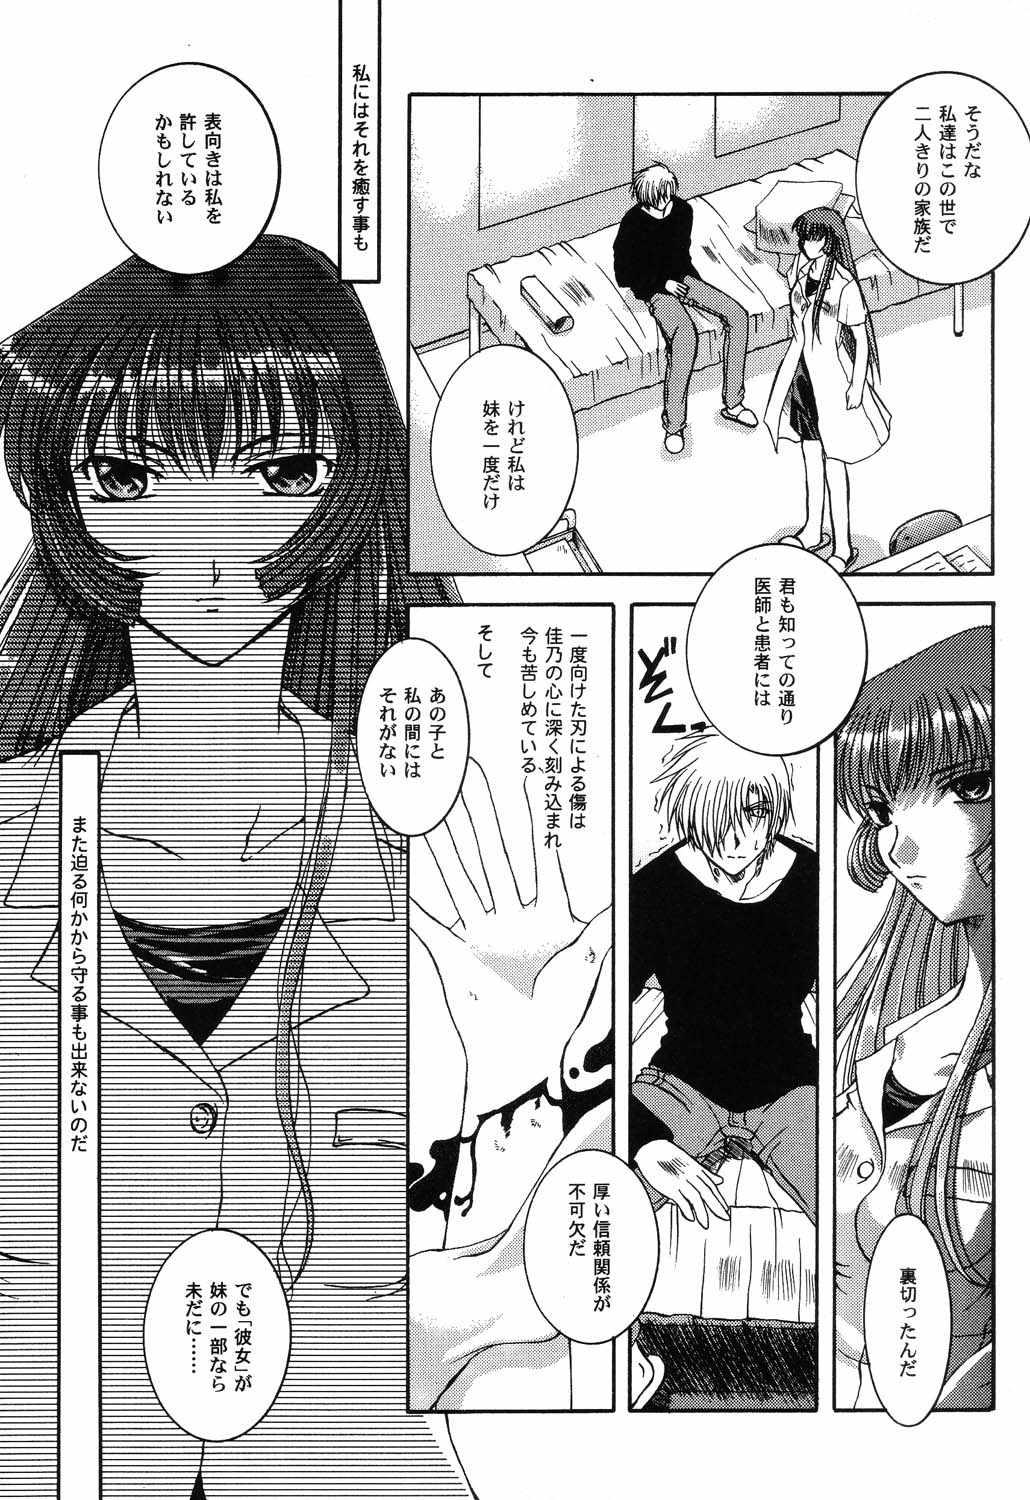 Boy Girl Himitsu no Serenade 3 - Kanon Air Belly - Page 10